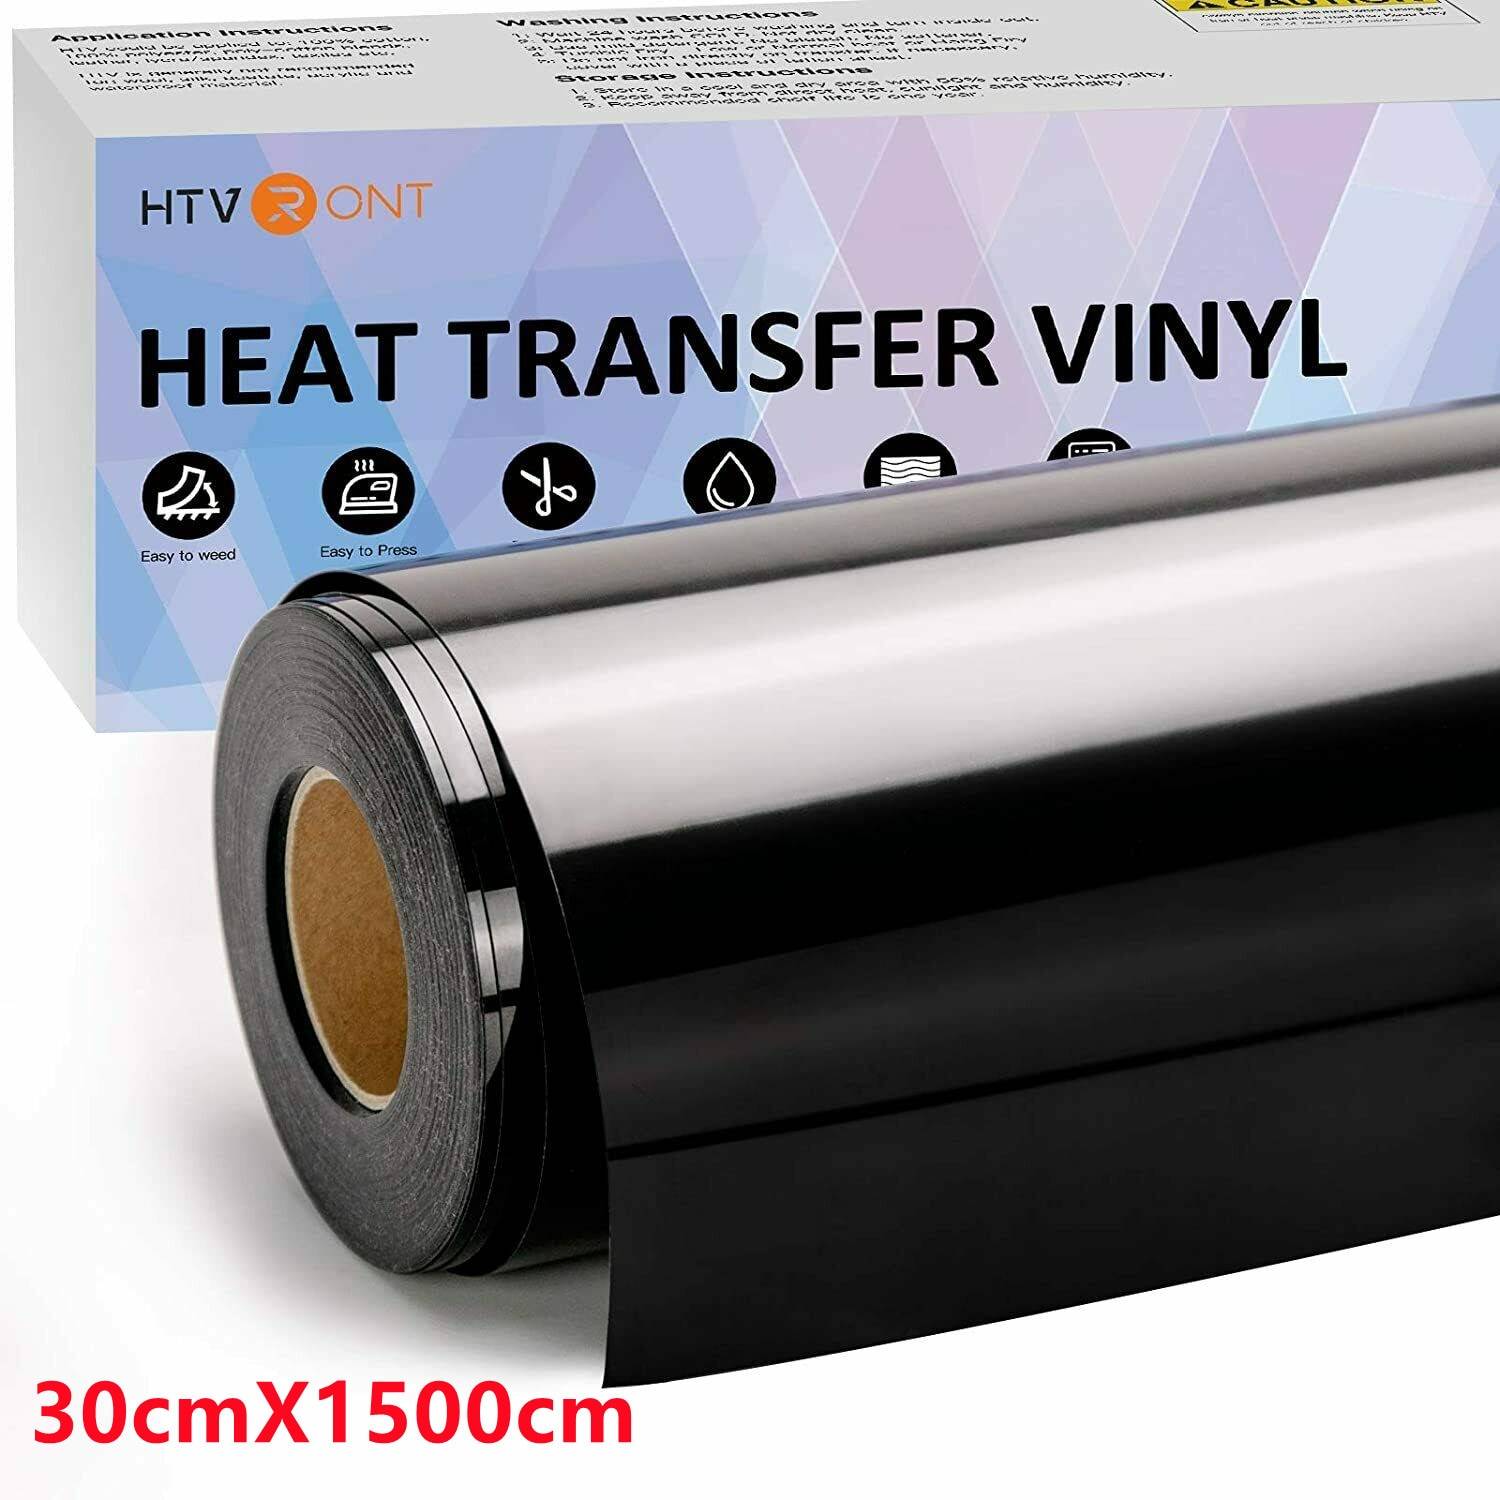 HTVRONT 12"X50ft/30x1500cm Heat Transfer Vinyl Roll for T-shirt Stickers Craft Iron on DIY HTV Film For Printing Clothing Home Decor cb5feb1b7314637725a2e7: Black|White